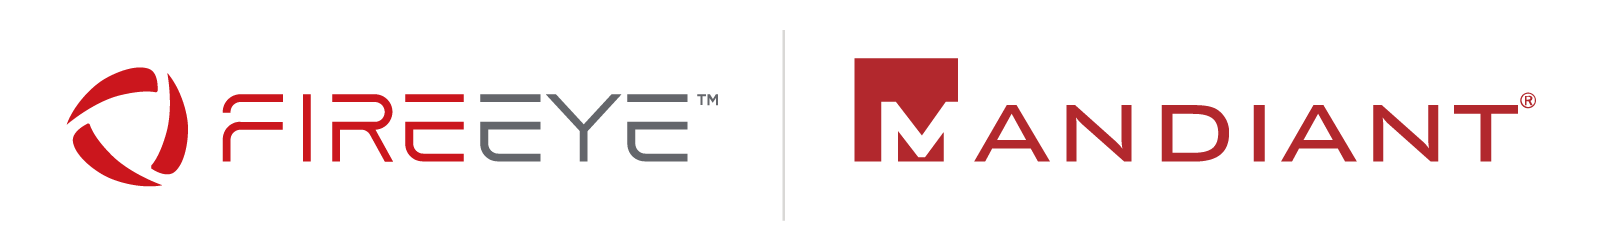 Fireeye / Mandiant logo